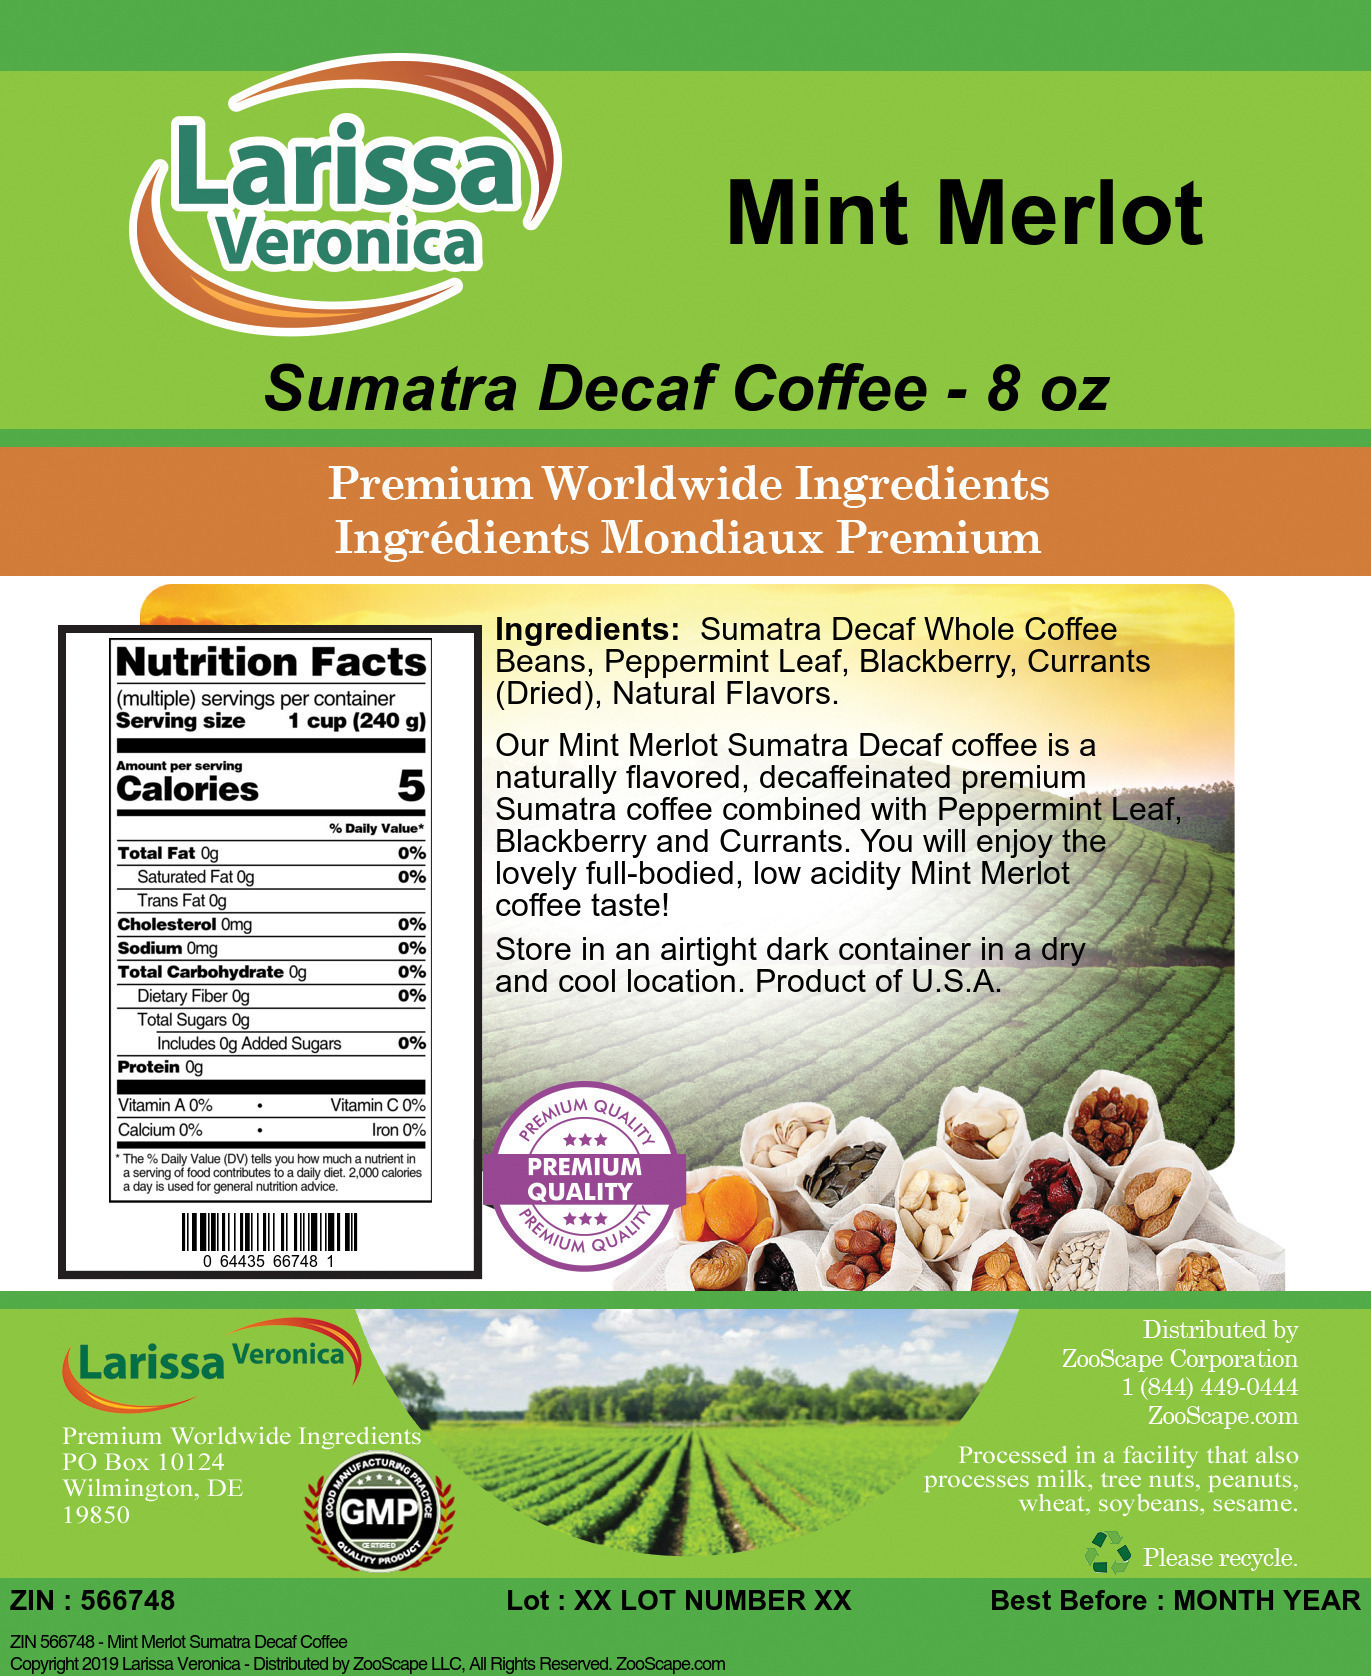 Mint Merlot Sumatra Decaf Coffee - Label